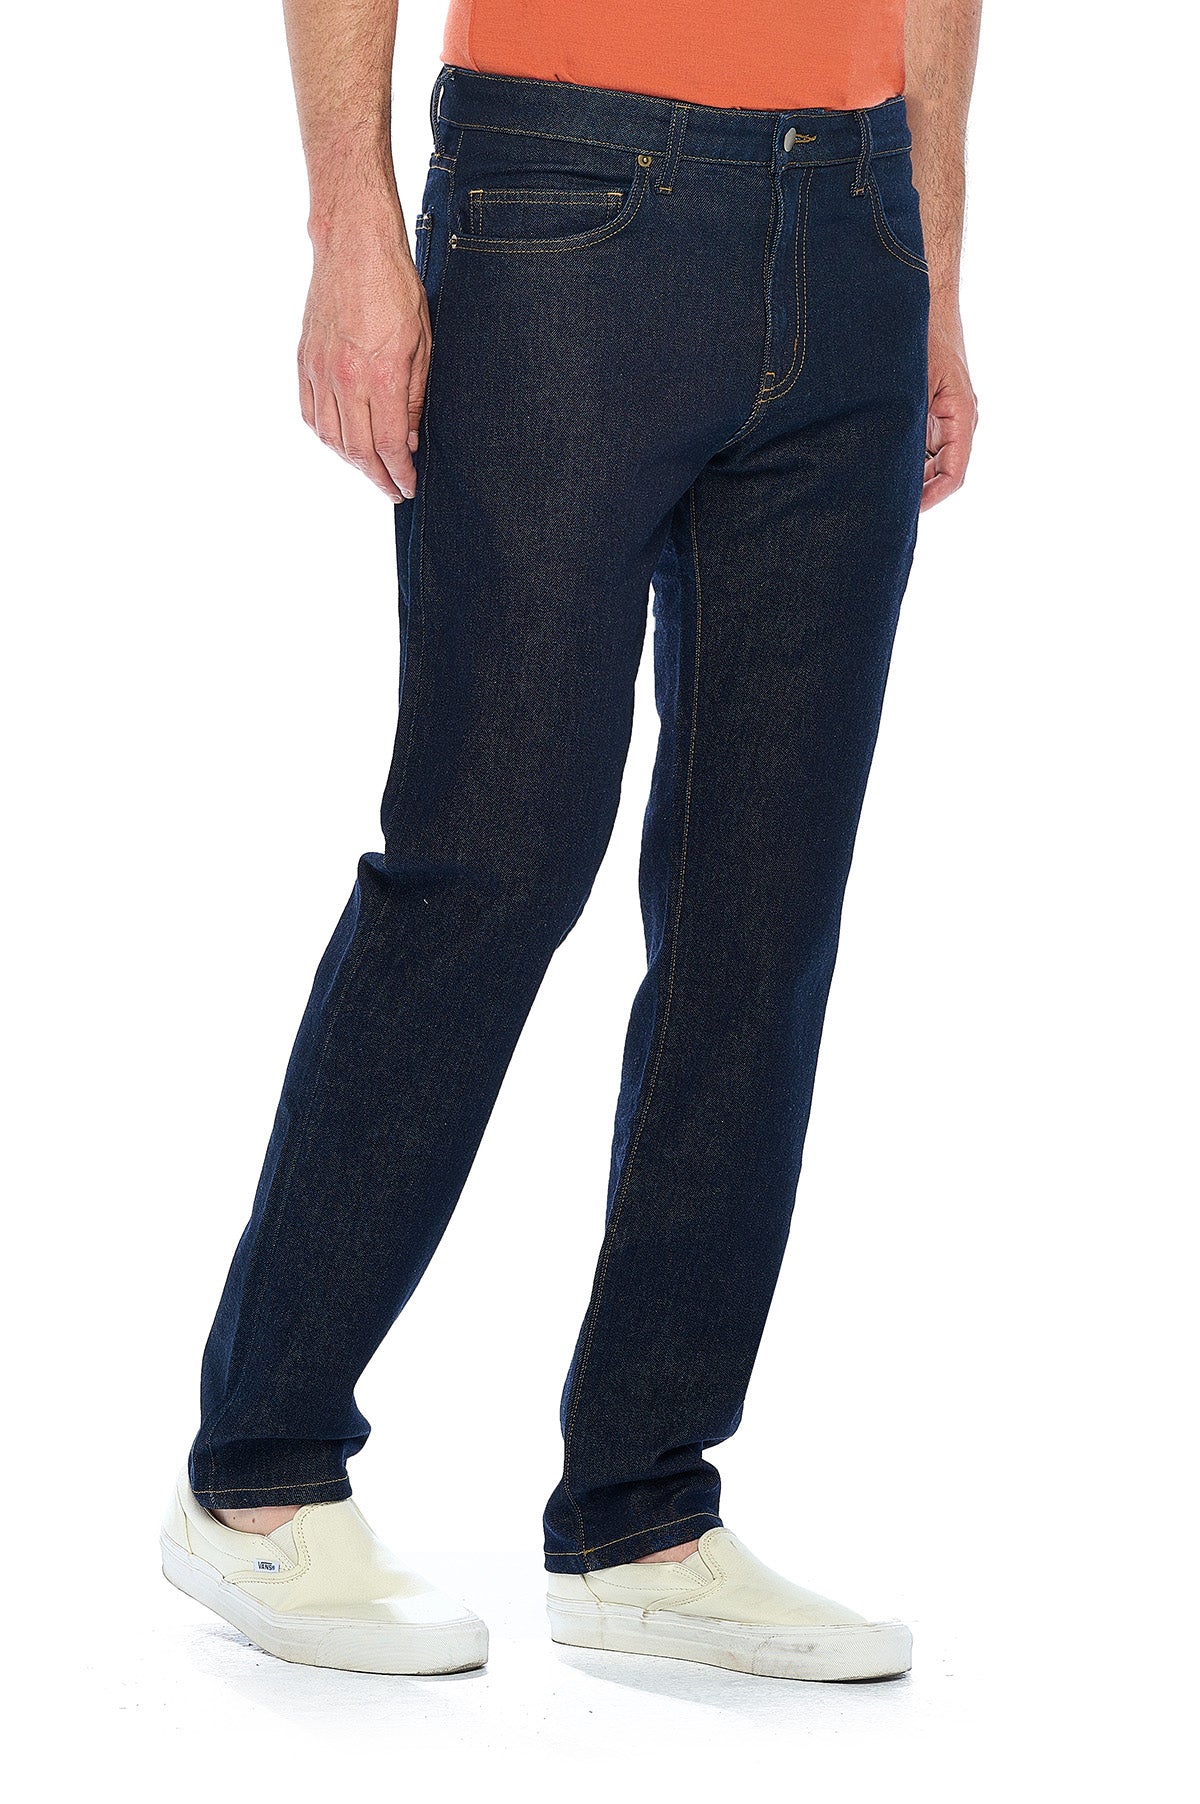 Aviator The Best Travel Jeans for Men | Selvedge Dark Indigo | Made in The USA 40